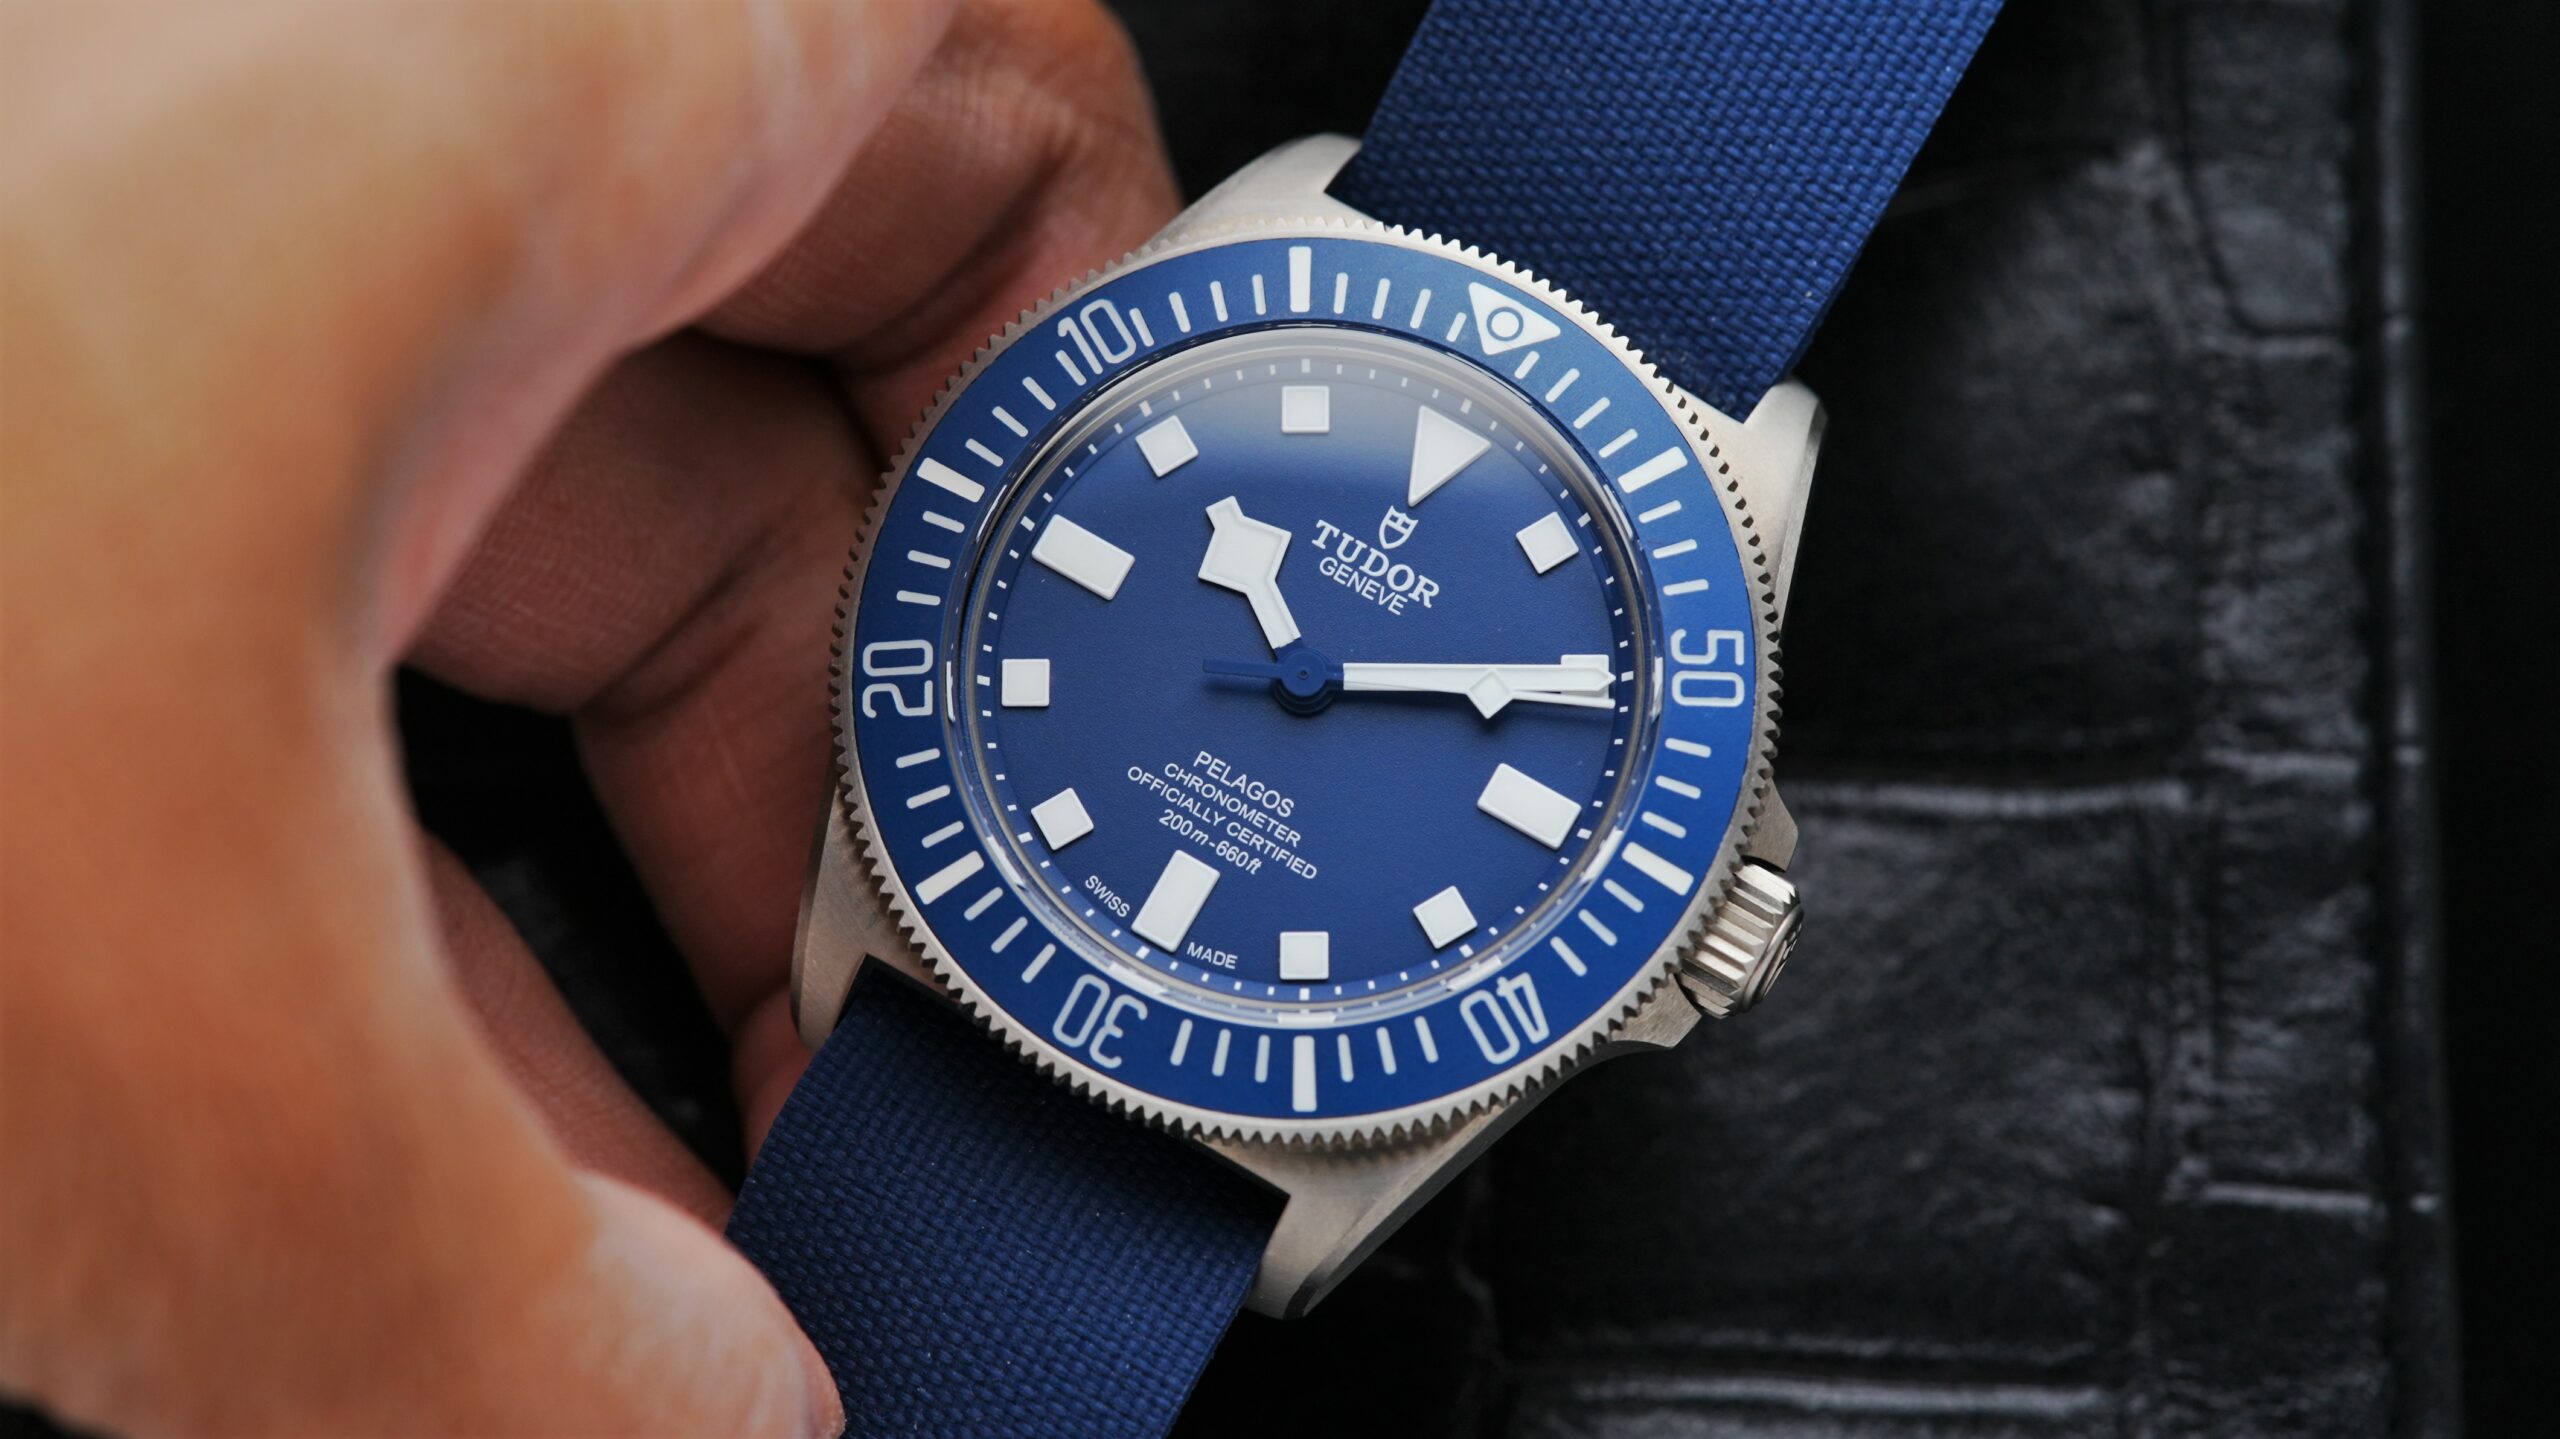 Tudor Pelagos Fxd 42 Marine Nationale watch being held in hand.